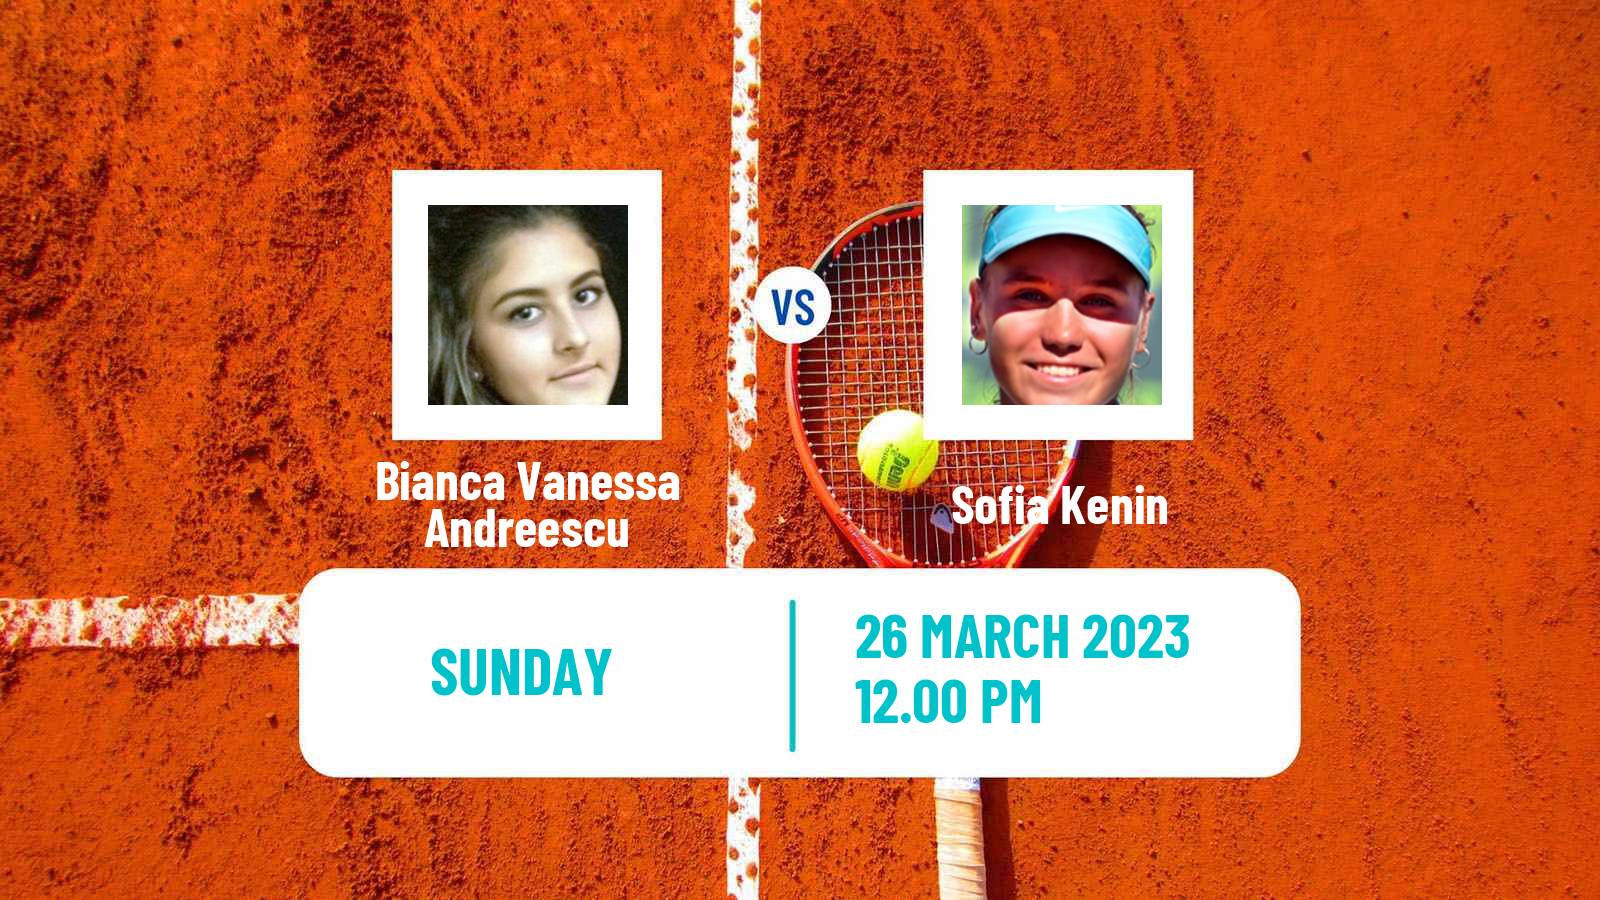 Tennis WTA Miami Bianca Vanessa Andreescu - Sofia Kenin